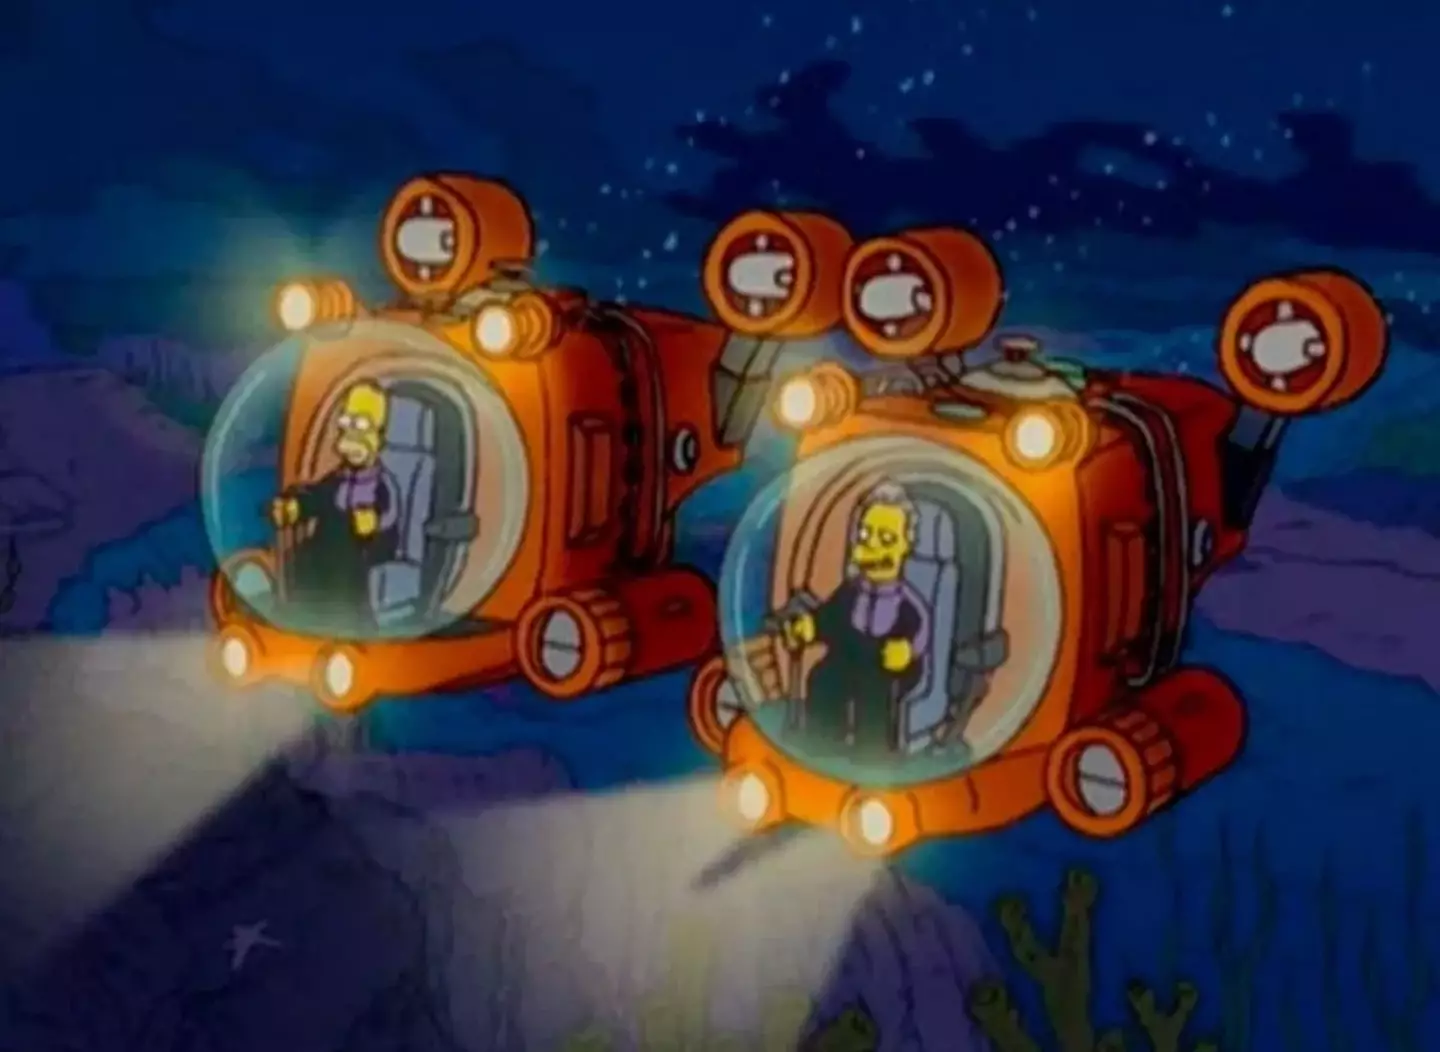 Homer's underwater adventure eerily mirrored the Titan sub's doomed mission.